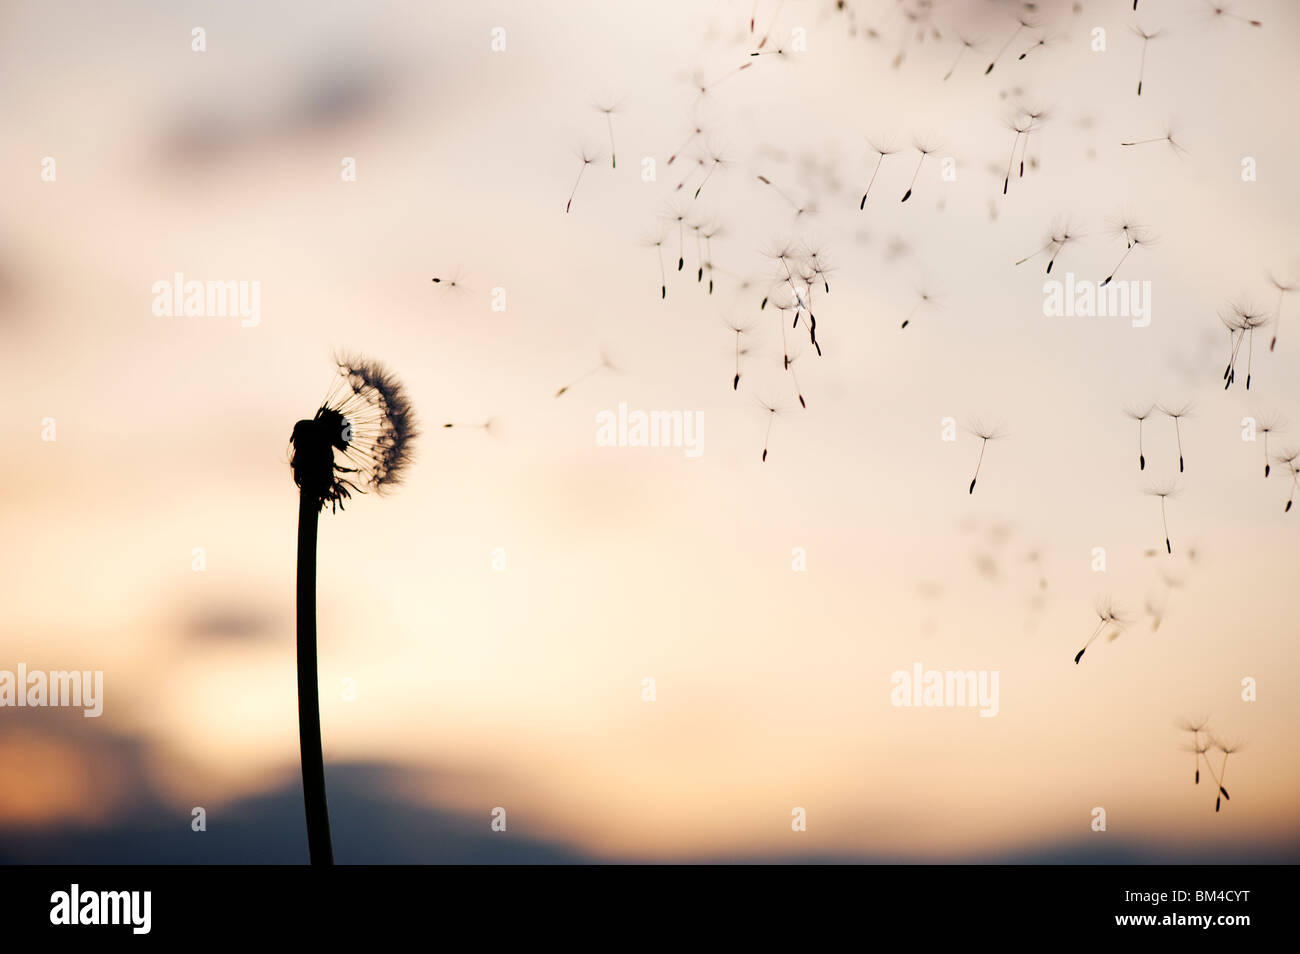 Dandelion seeds dispersing at sunset. Silhouette Stock Photo